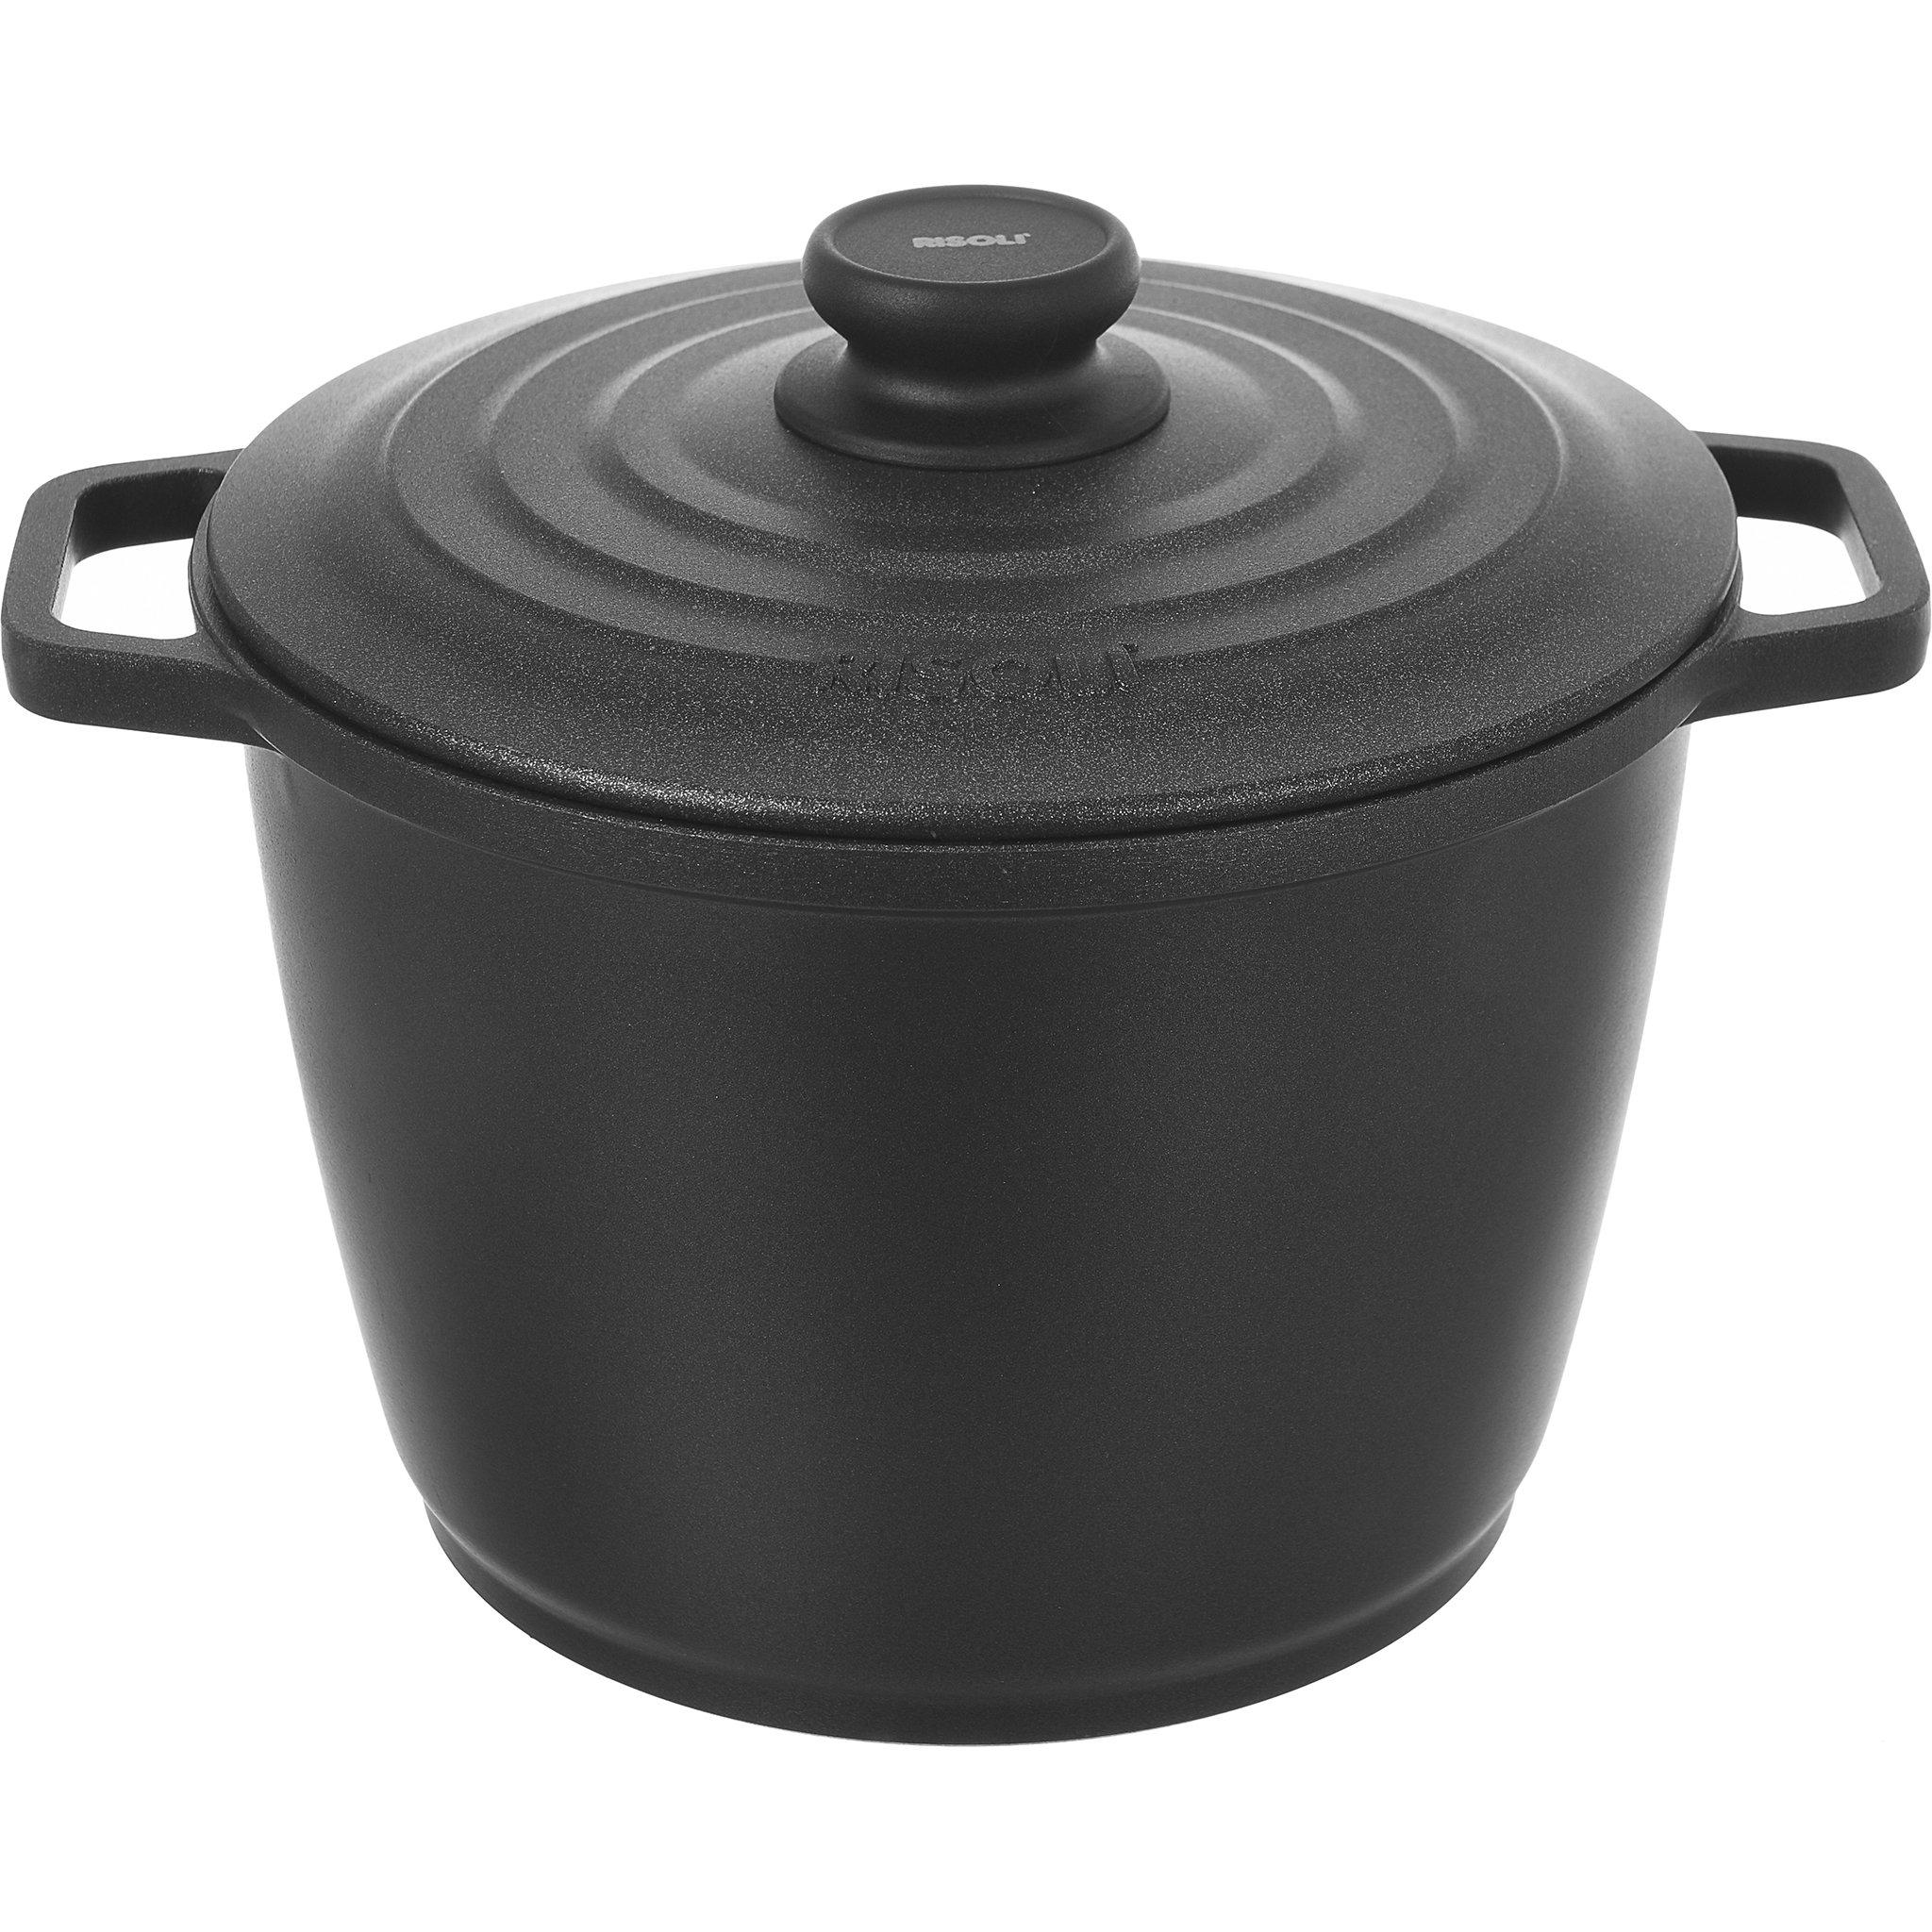 Risoli - Granito Deep Pot with Cover - Black - Die Cast Aluminum - 24cm - 44000374